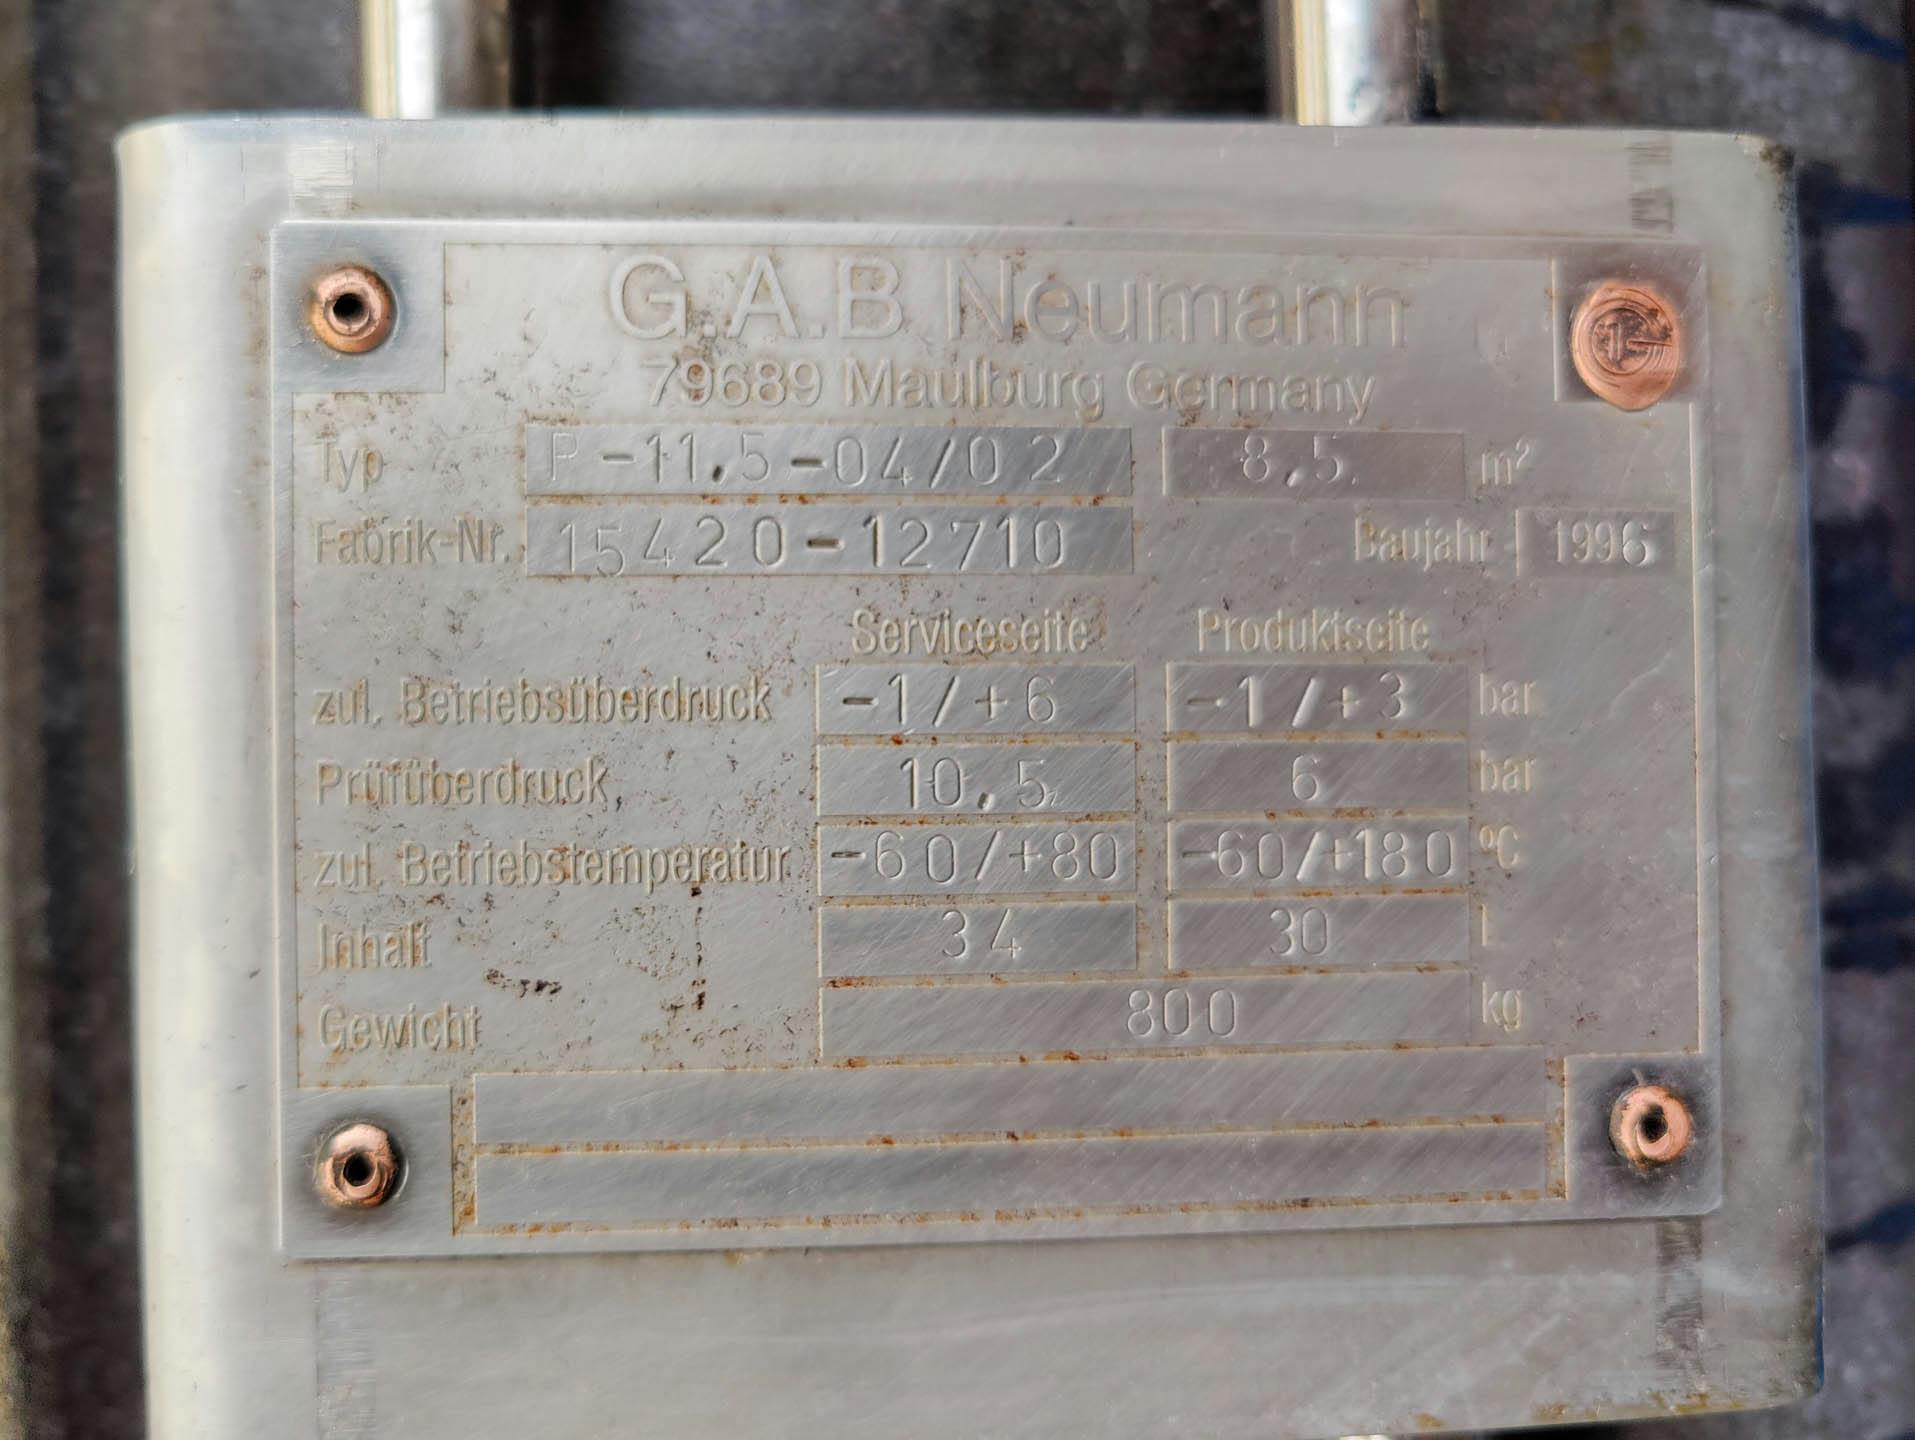 Gab Neumann R-11,5-04/02 Ringnut - Scambiatore di calore a fascio tubiero - image 6